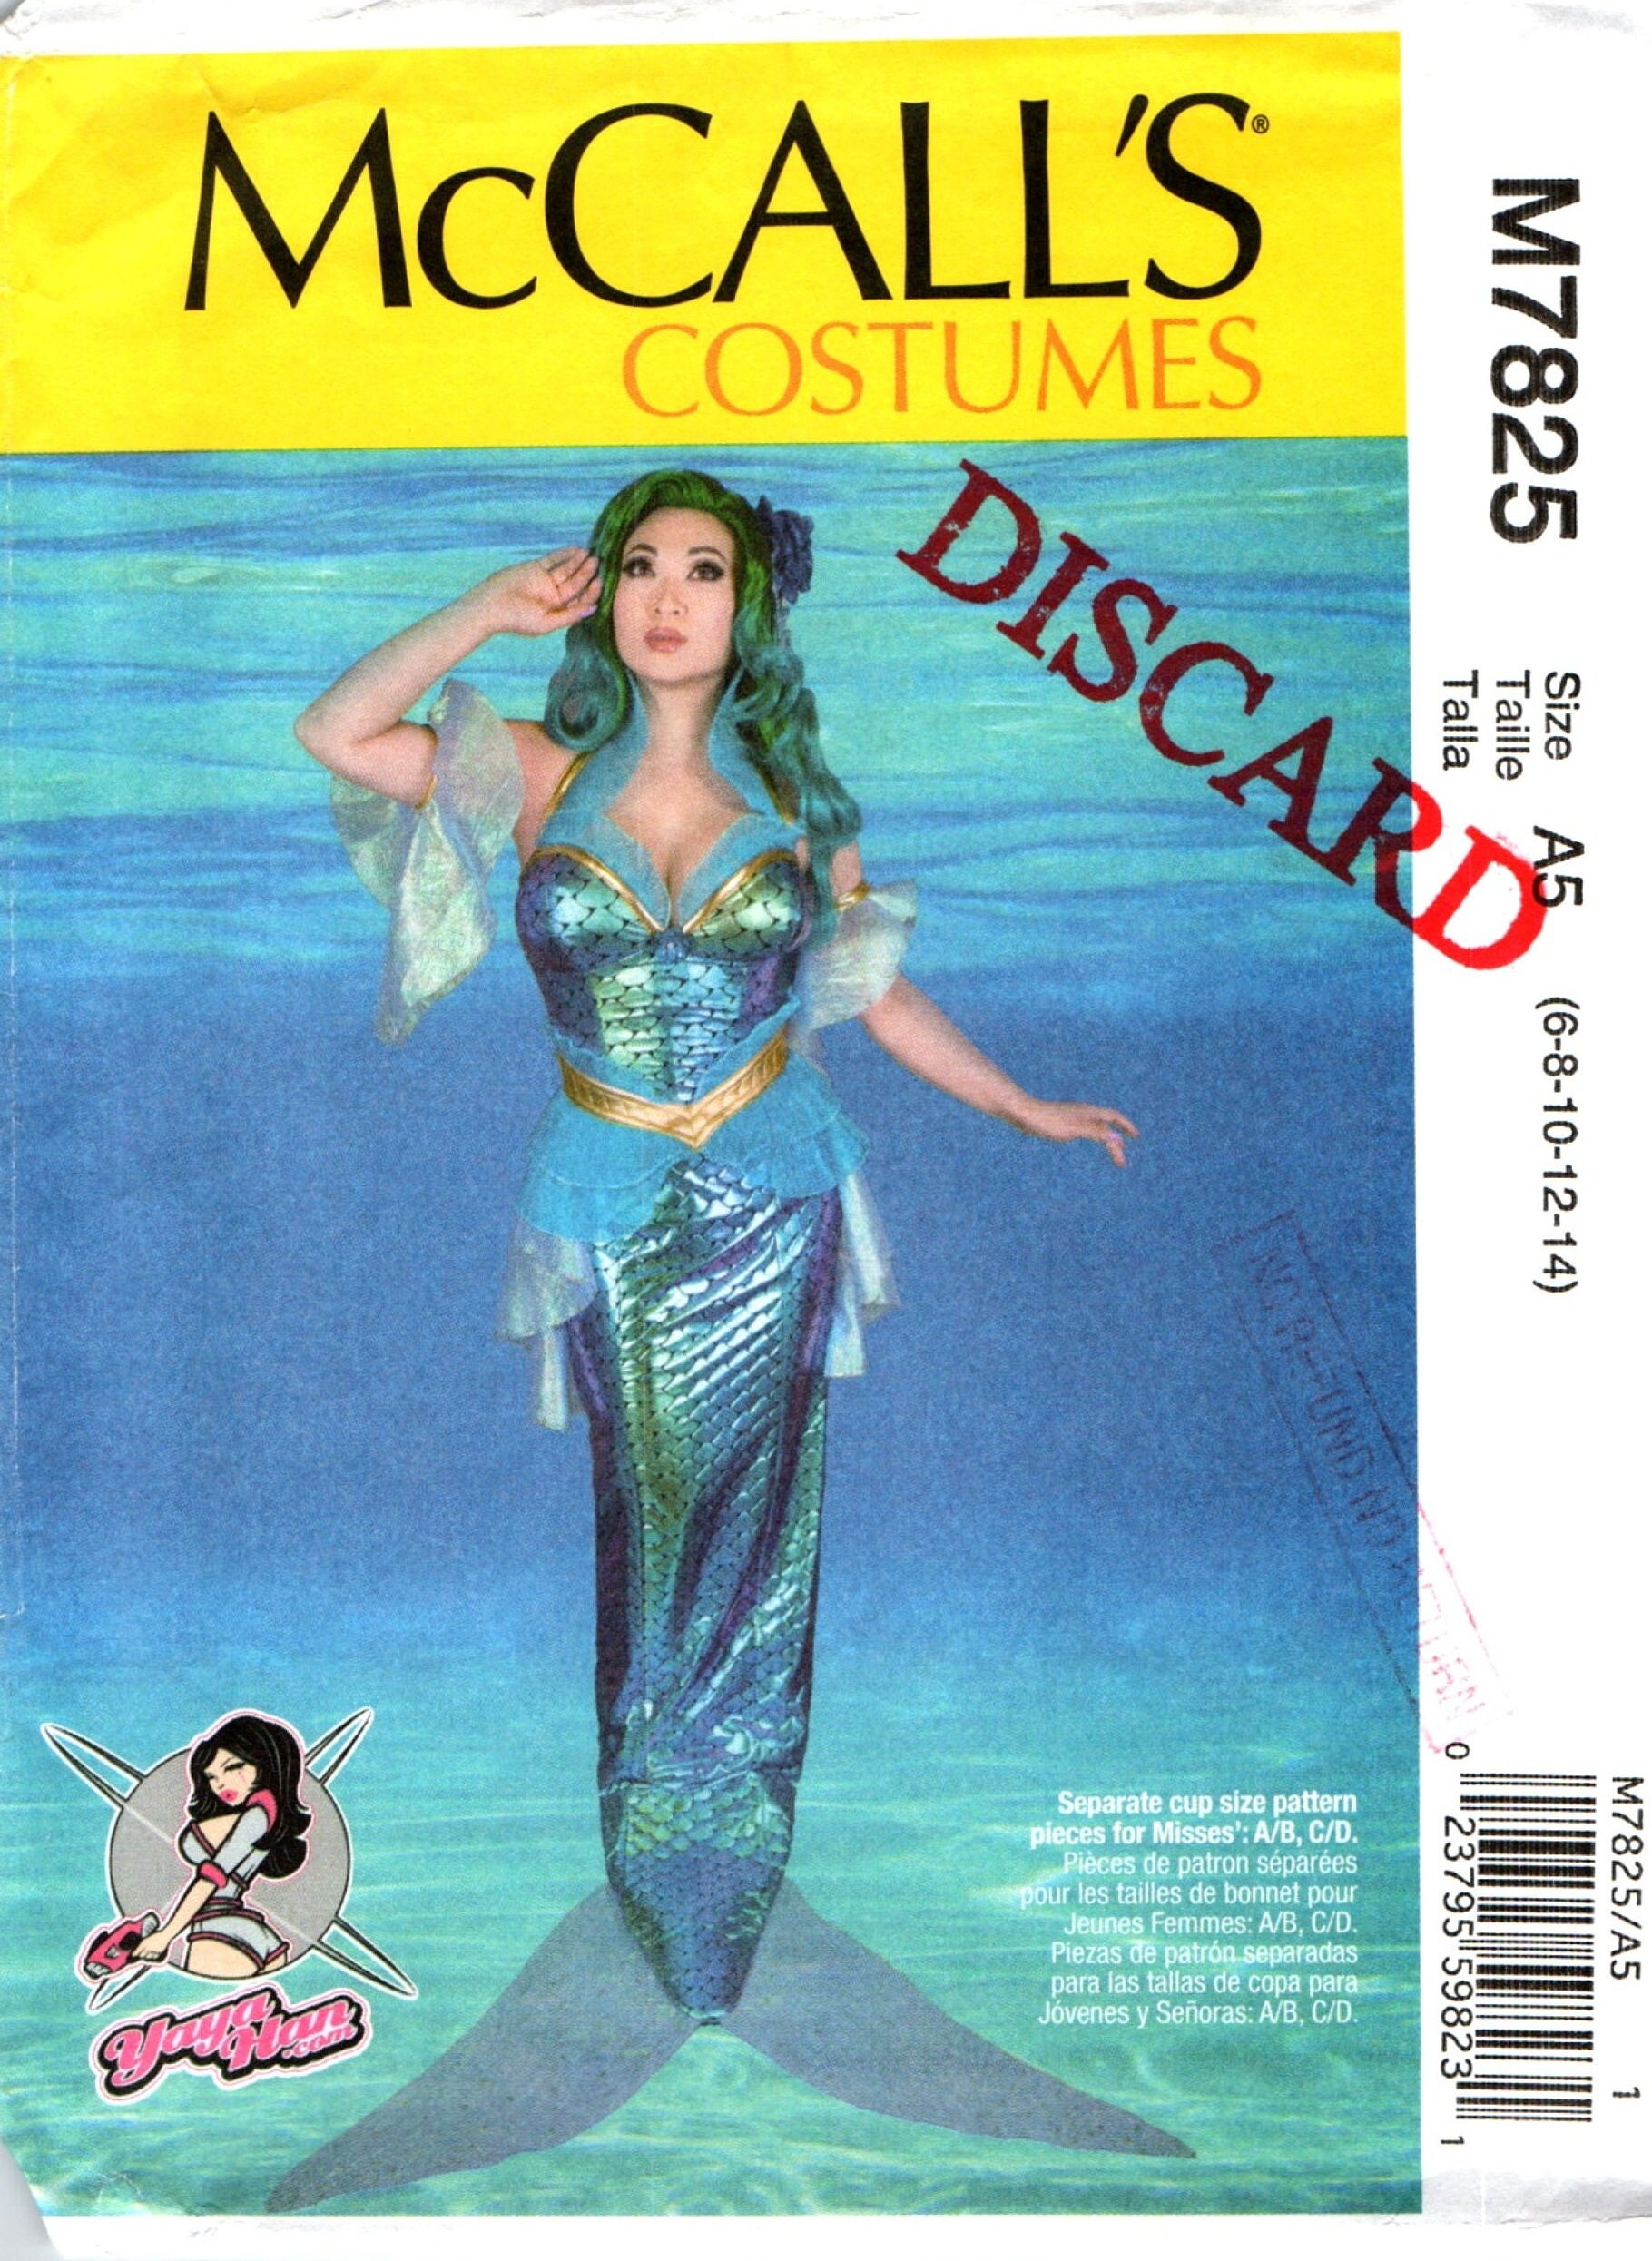 Artful Gleam Pearl Starfish Luxury Pure Soft Silicone Bra Top Corset  Mermaid Cosplay Costume Patent-Protected